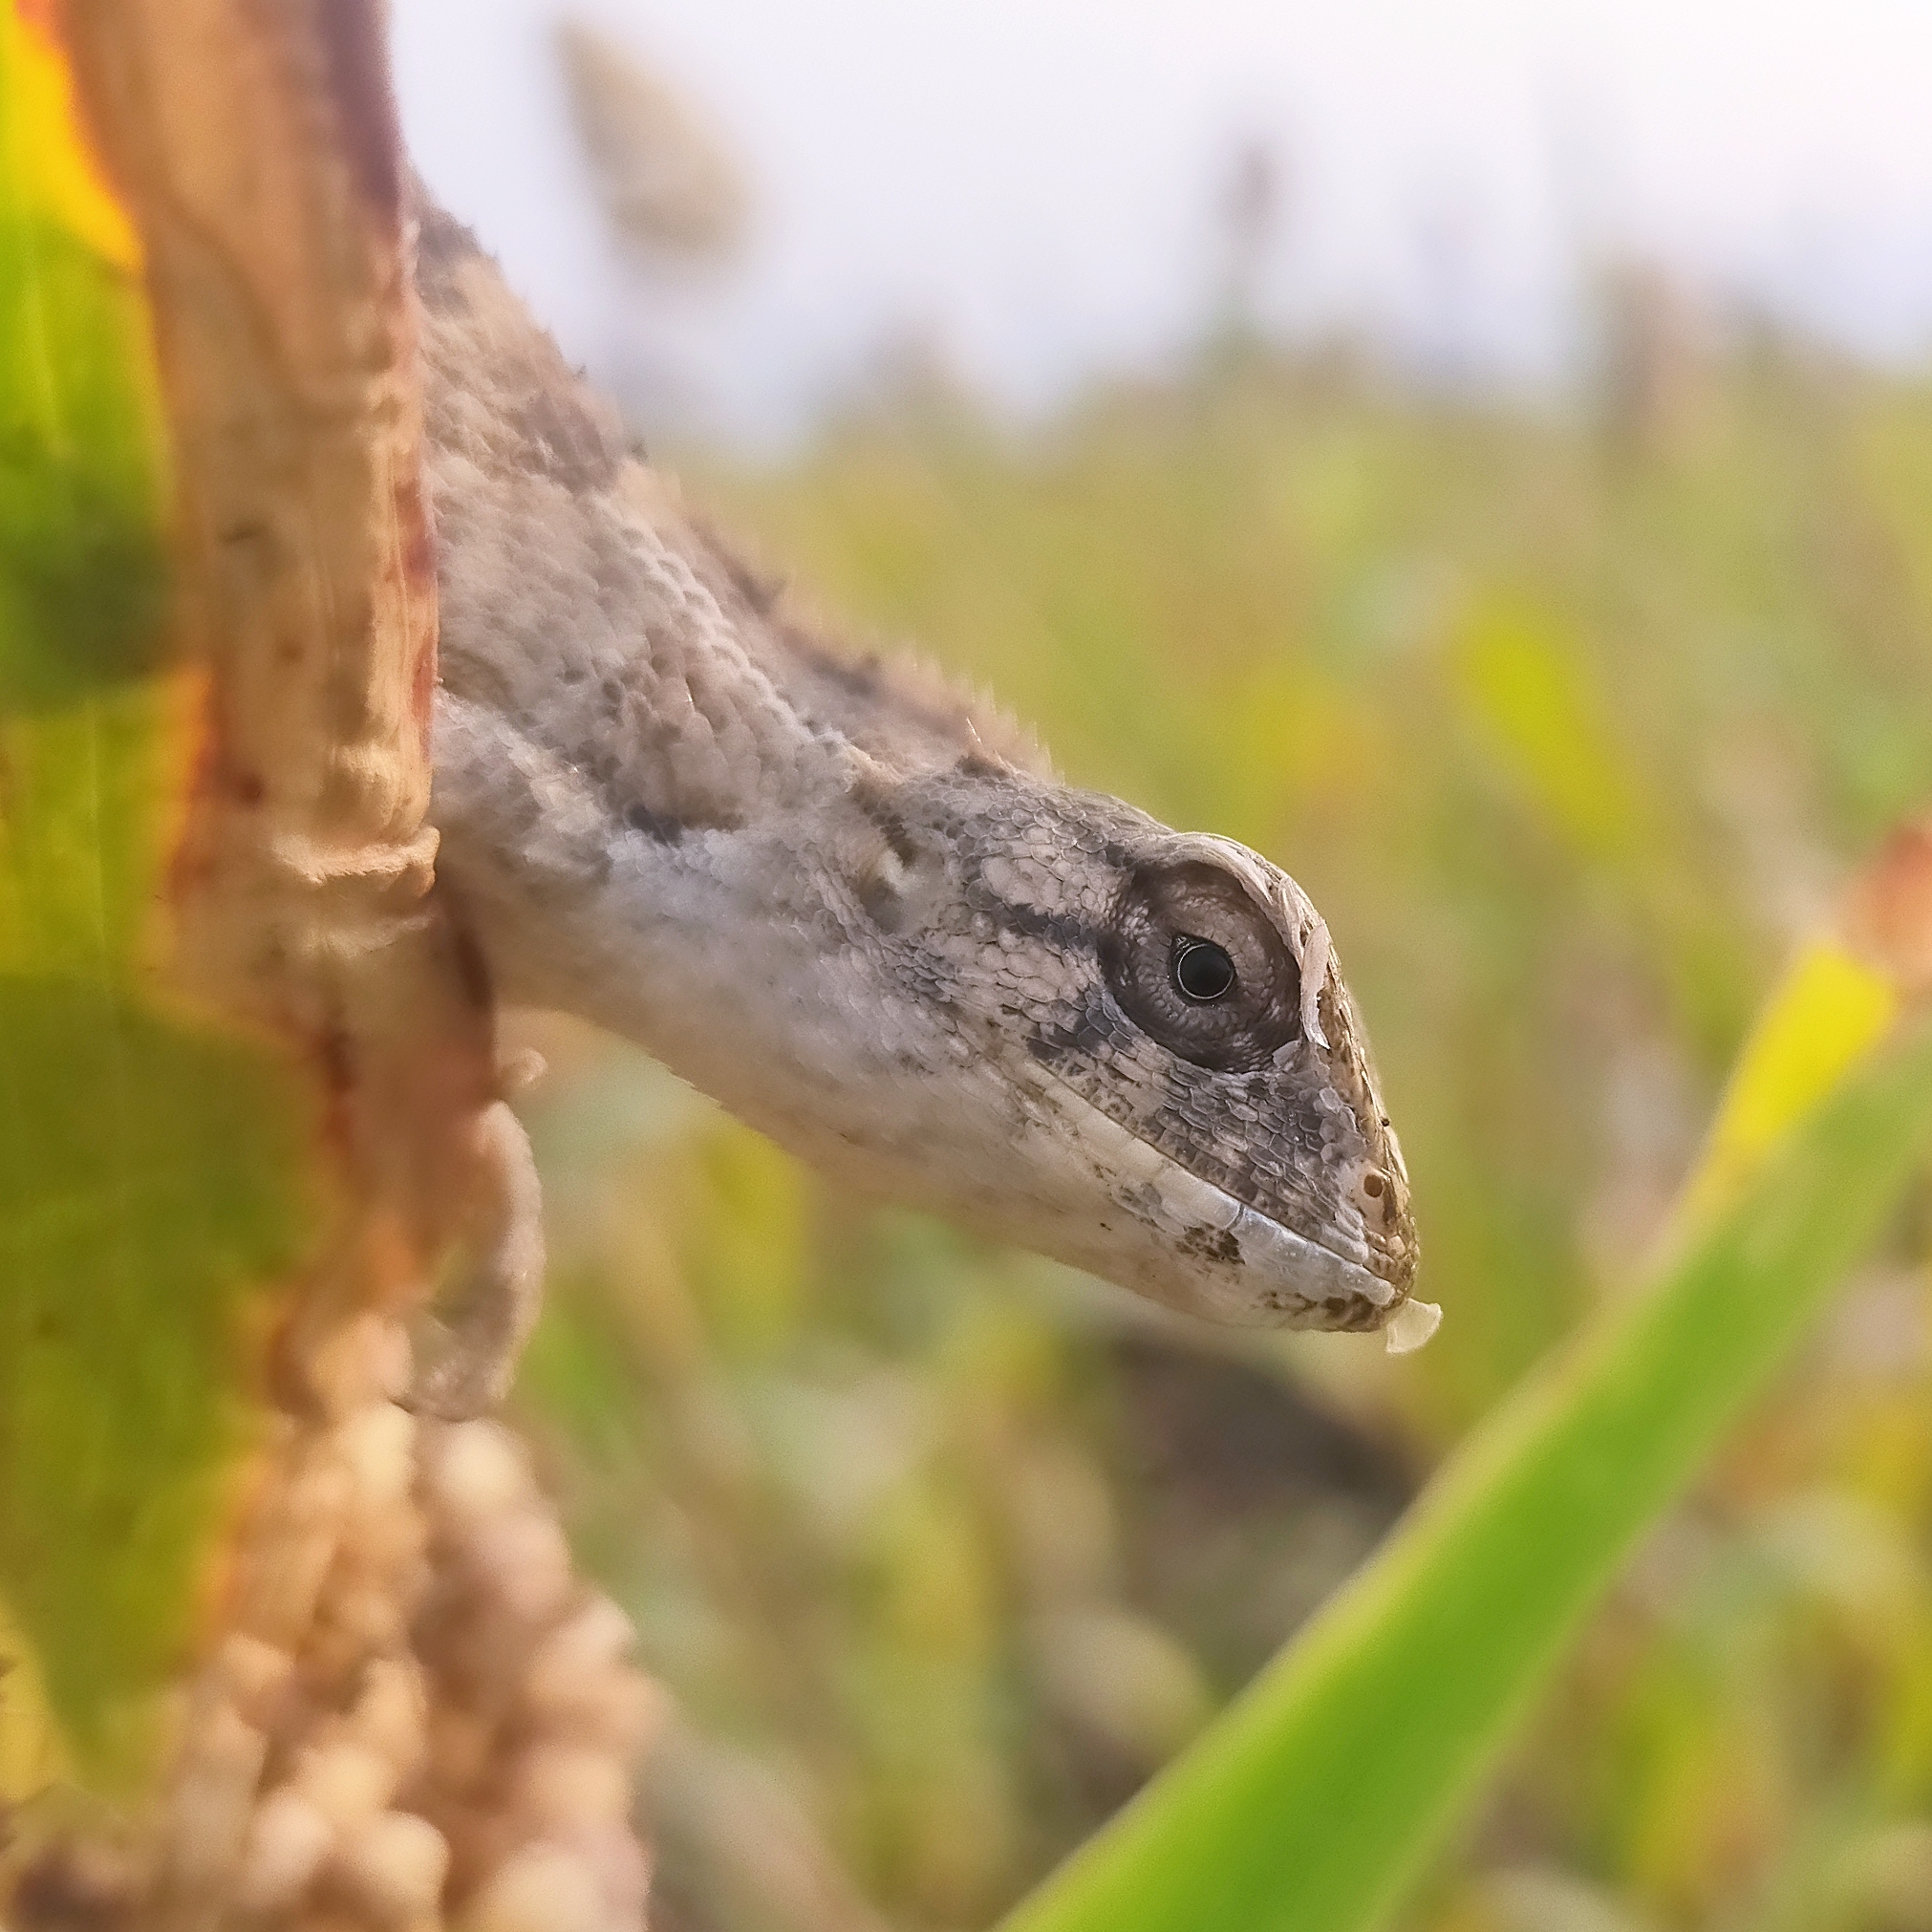 Close-up of lizard in the garden